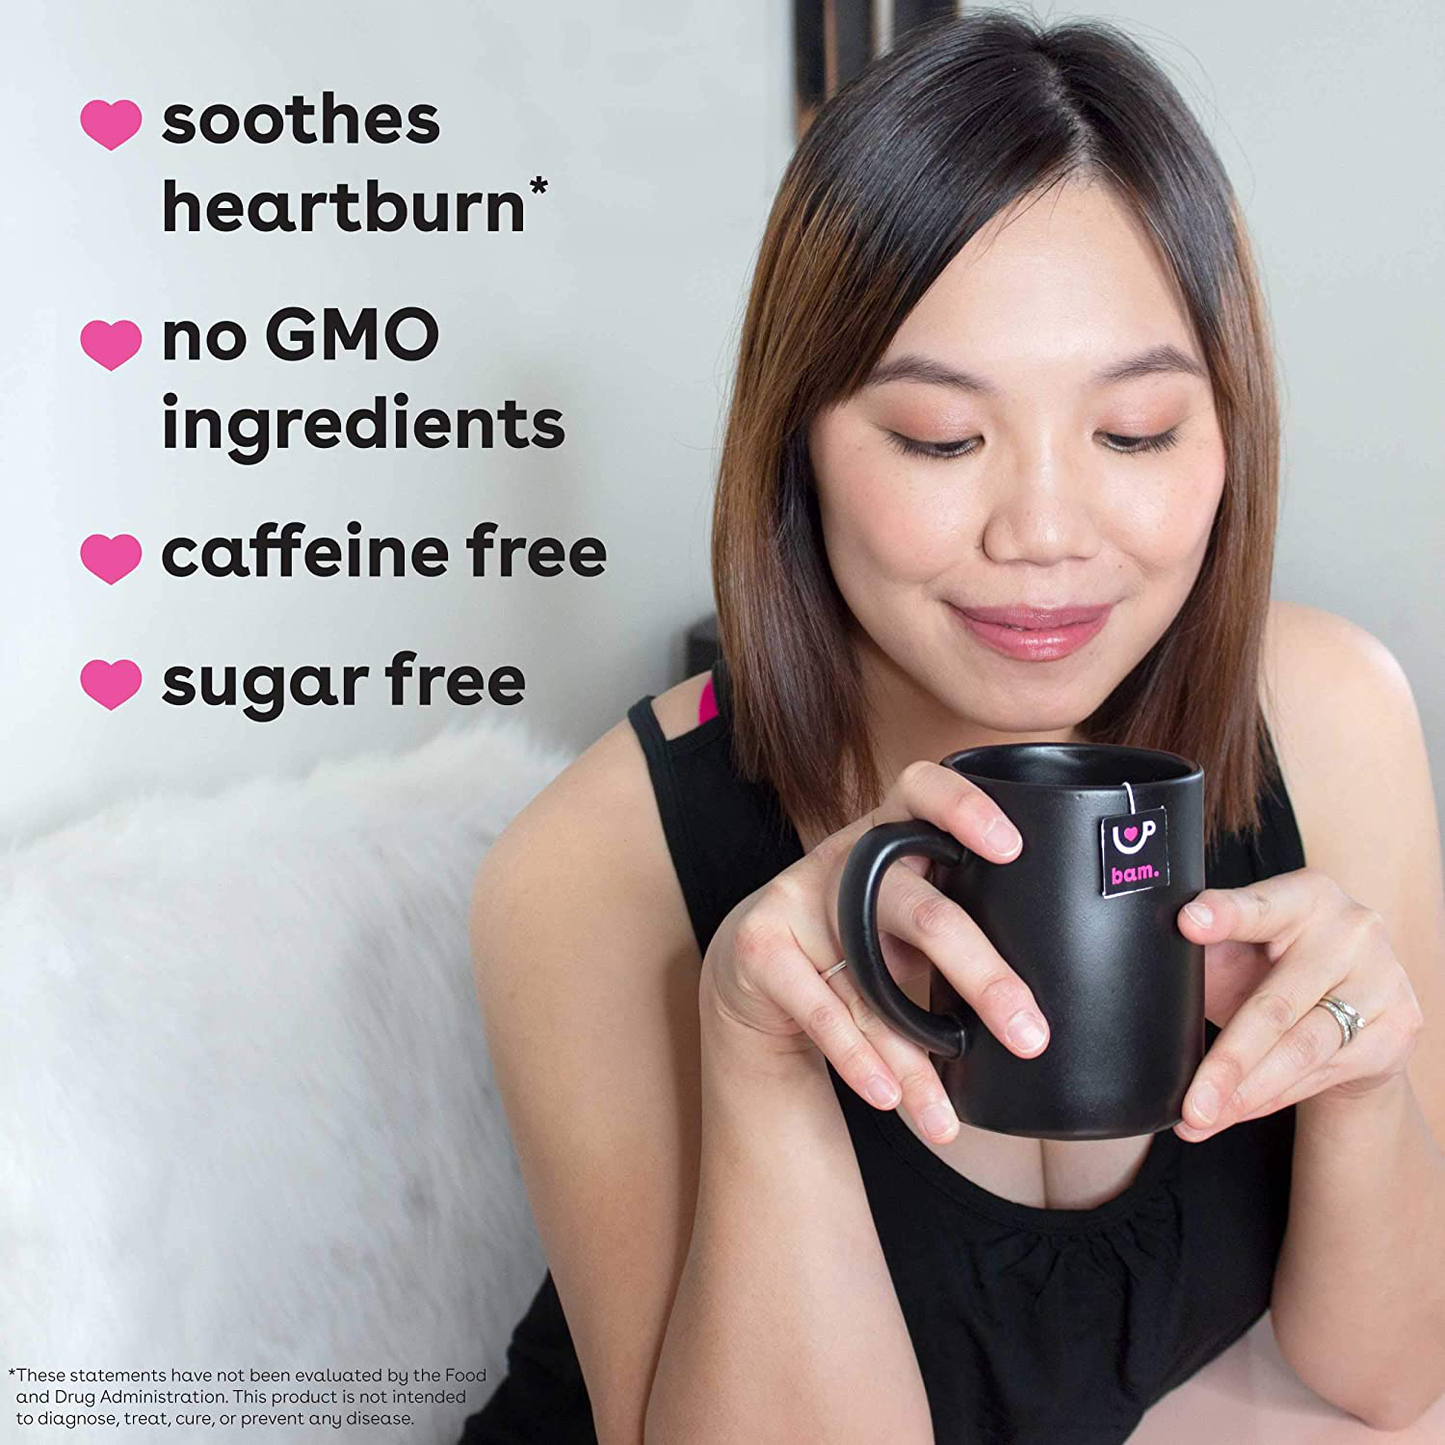 Bamboobies Women's Postpartum Tea, Warm Vanilla, Helps Balance Hormones and Mood, Organic, Non GMO, Caffeine Free, and Sugar Free, 20 Tea Bags